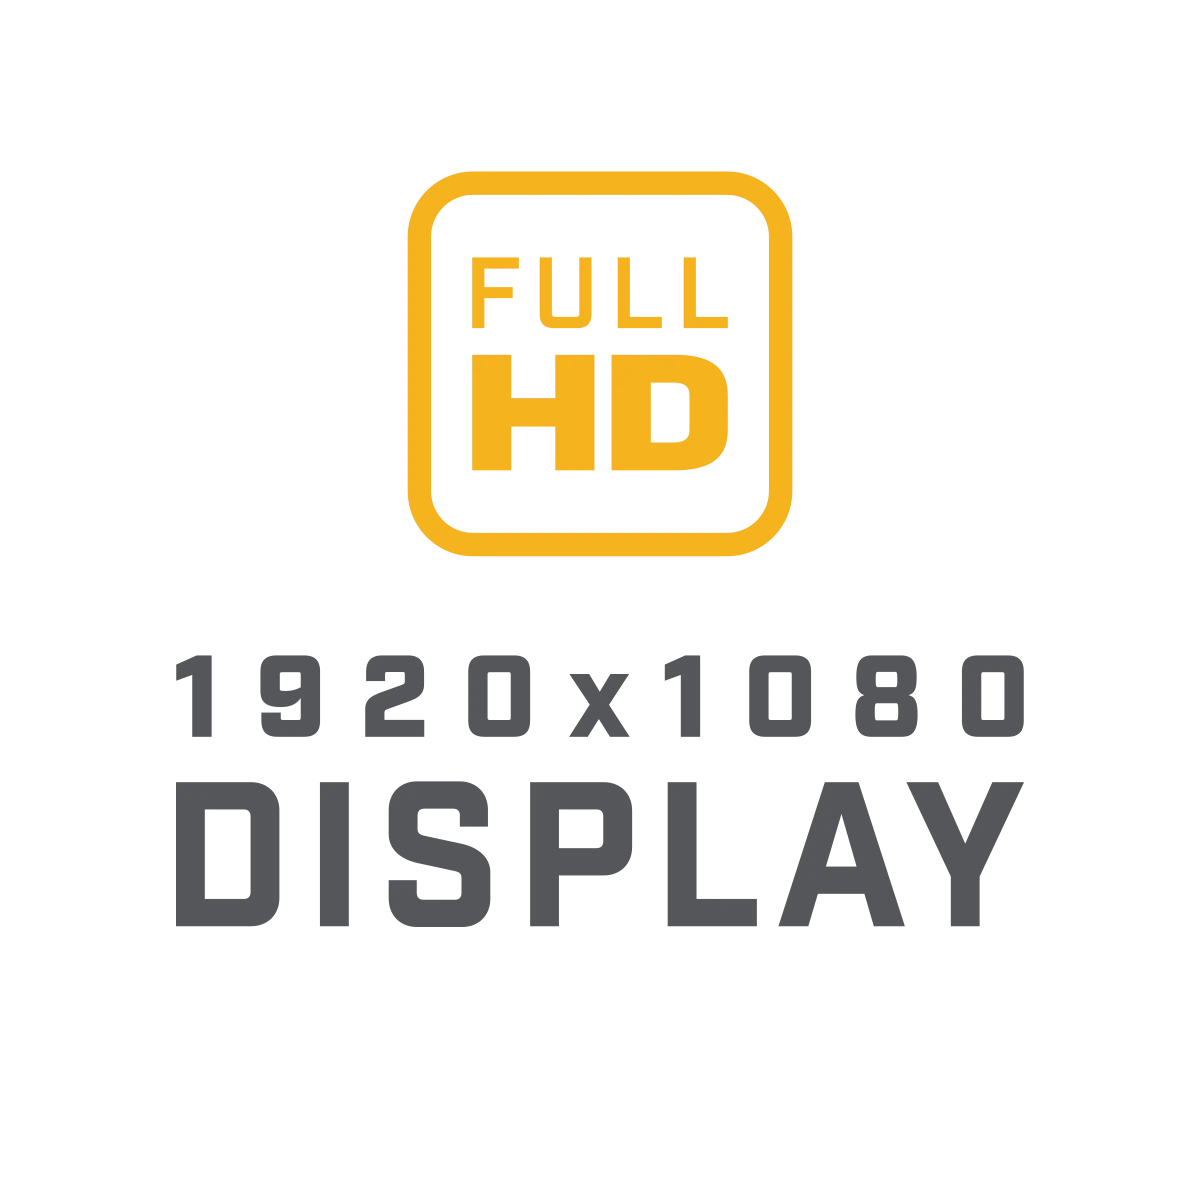 1920 x 1080 Full HD Display